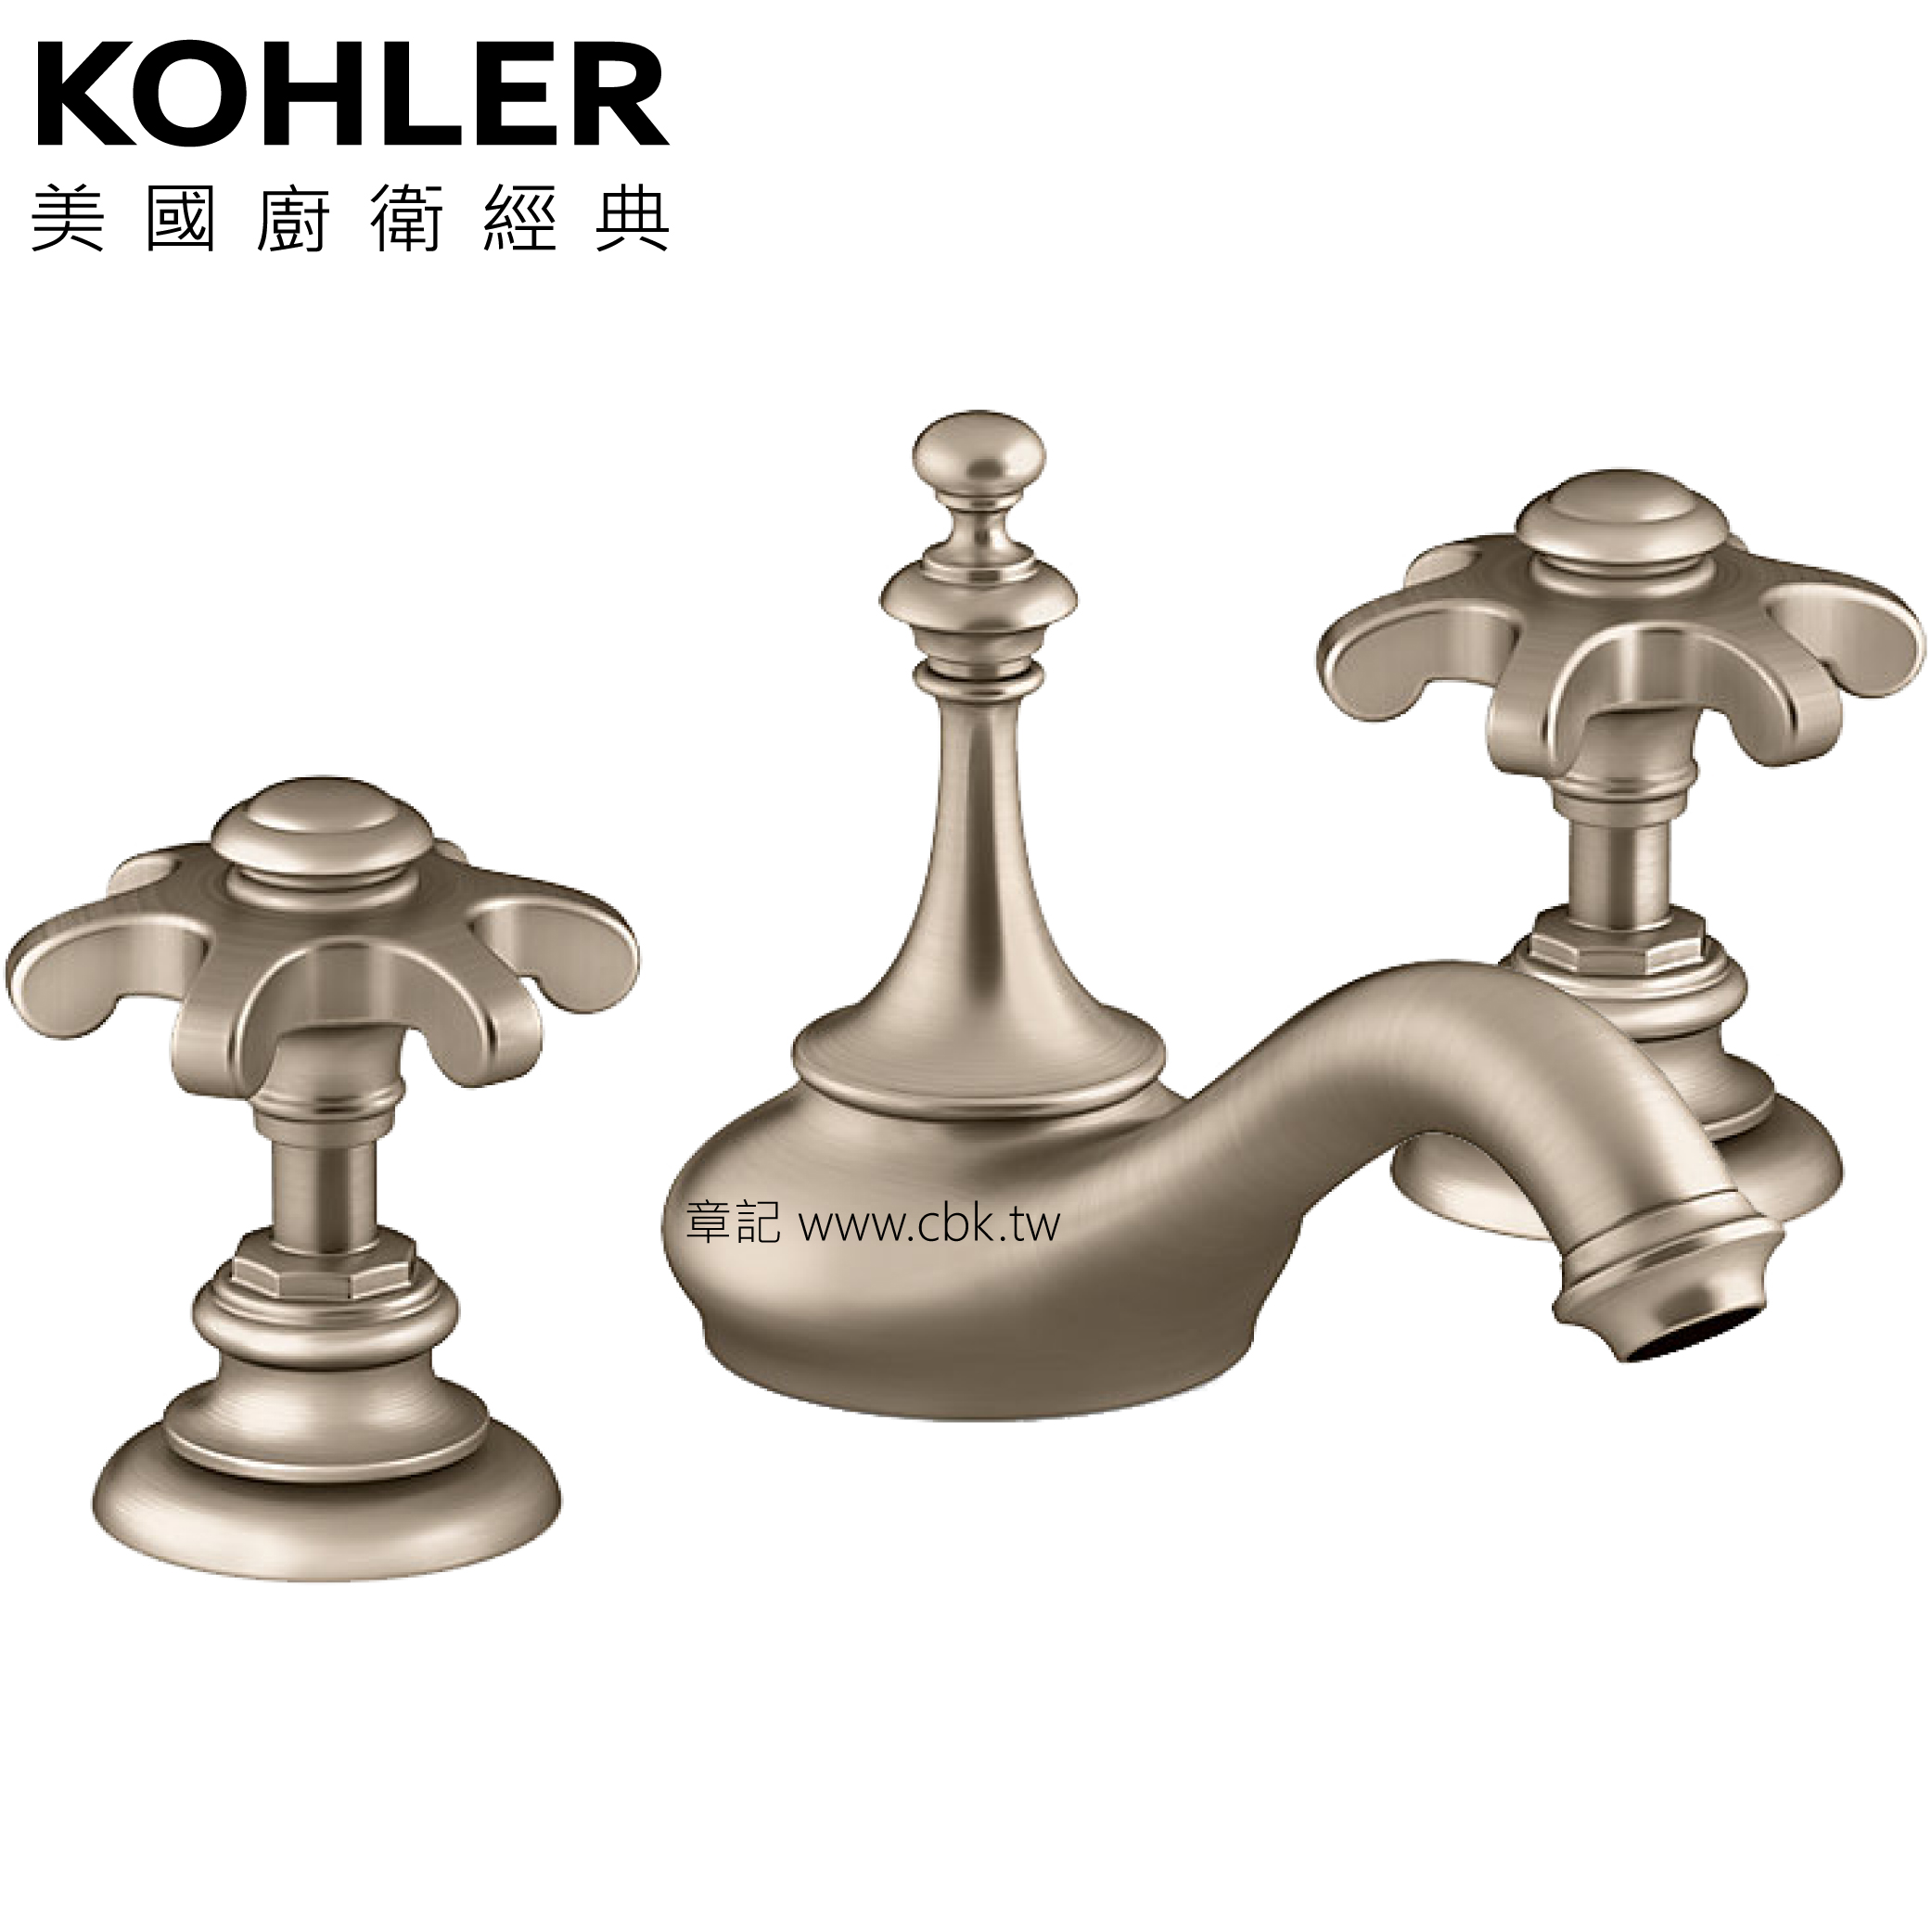 KOHLER Artifacts 三件式臉盆龍頭 K-72758T-BV_K-98068T-3M-BV  |面盆 . 浴櫃|面盆龍頭